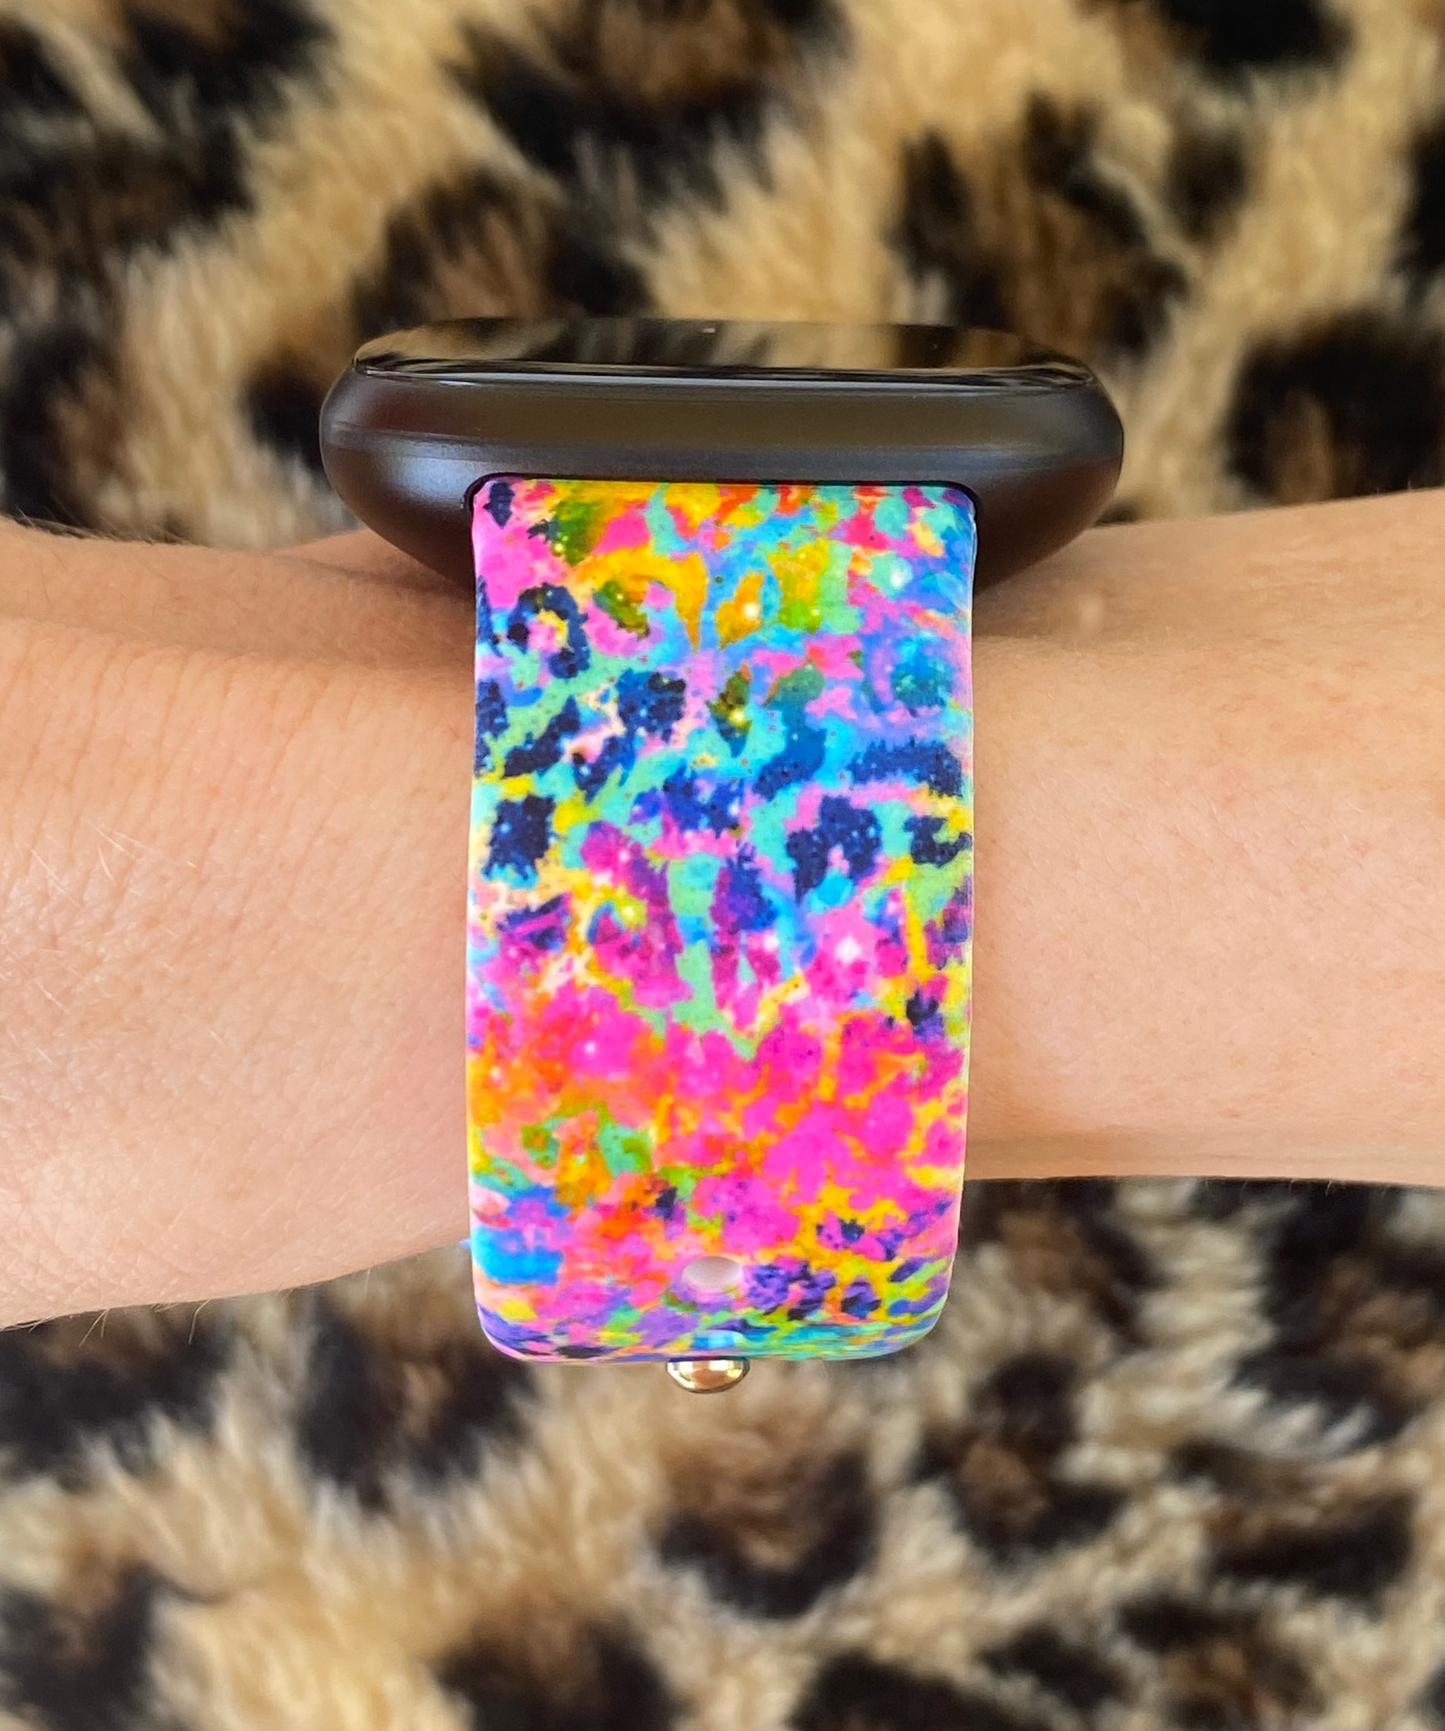 Neon Leopard Splatter Fitbit Versa 1/2 Watch Band